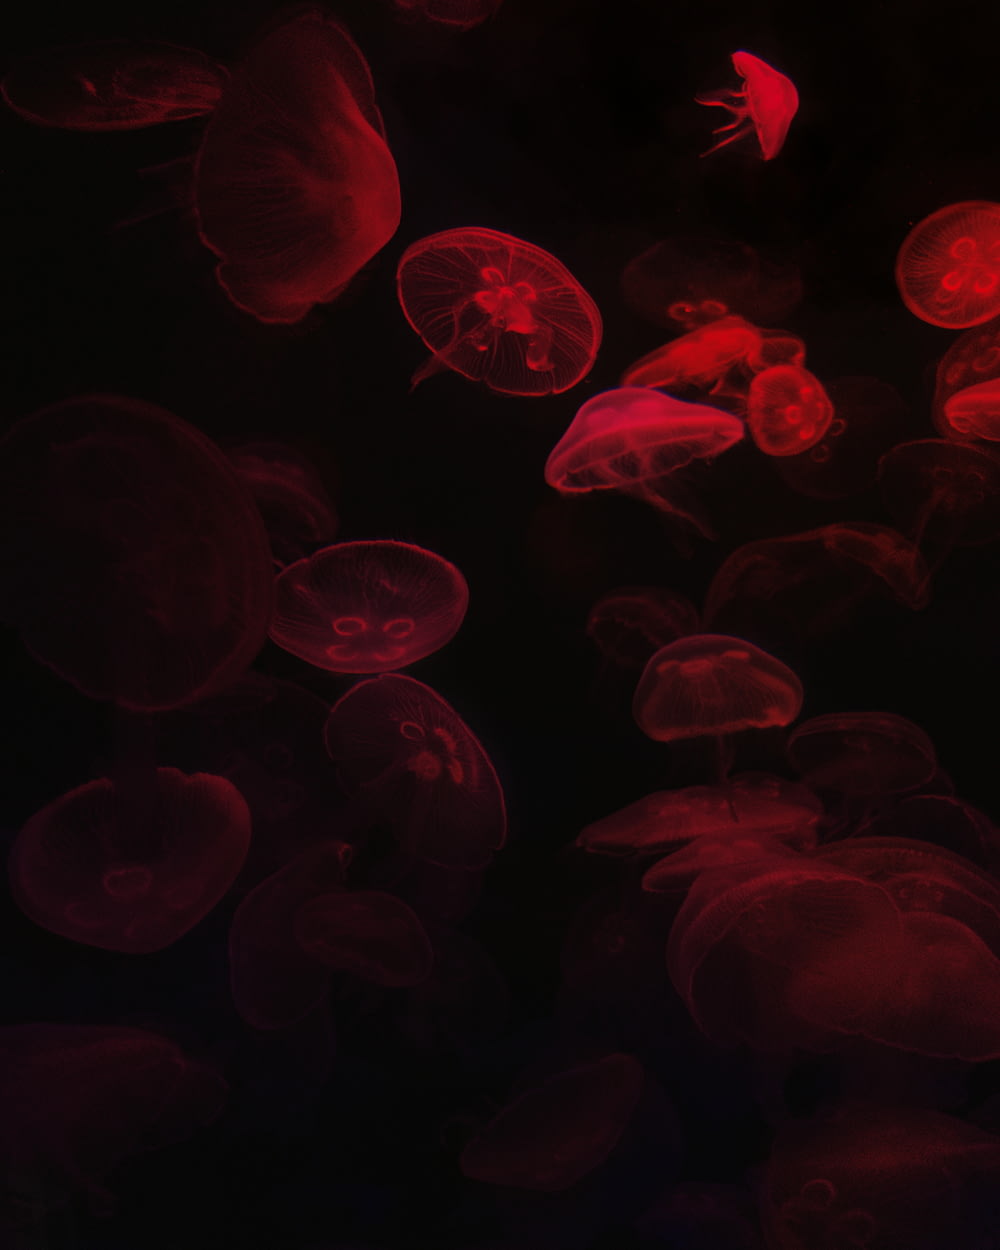 red jellyfish